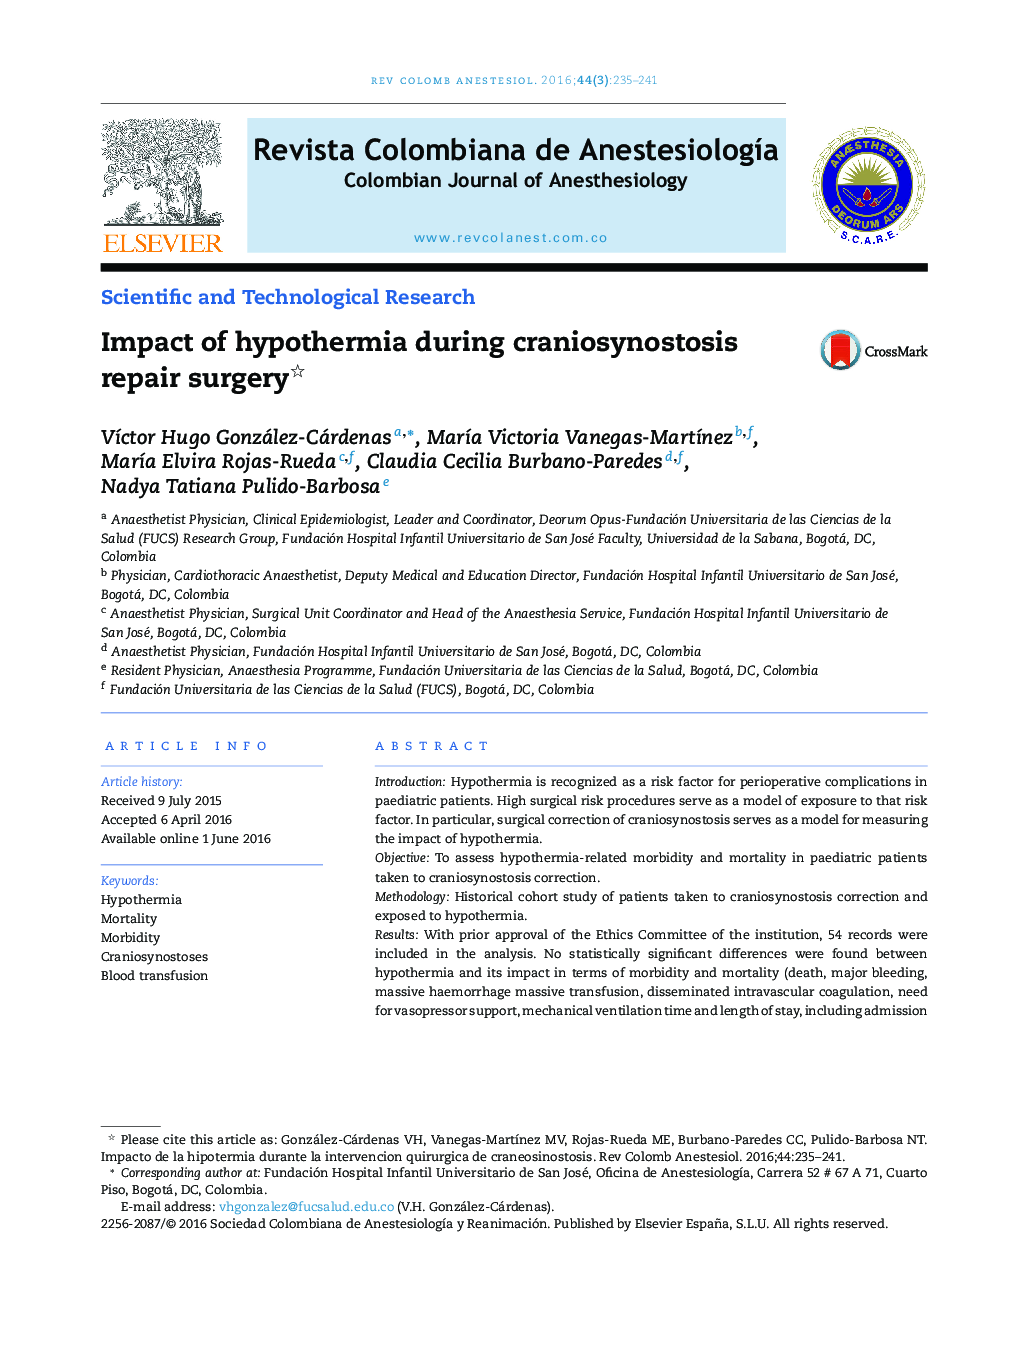 Impact of hypothermia during craniosynostosis repair surgery 